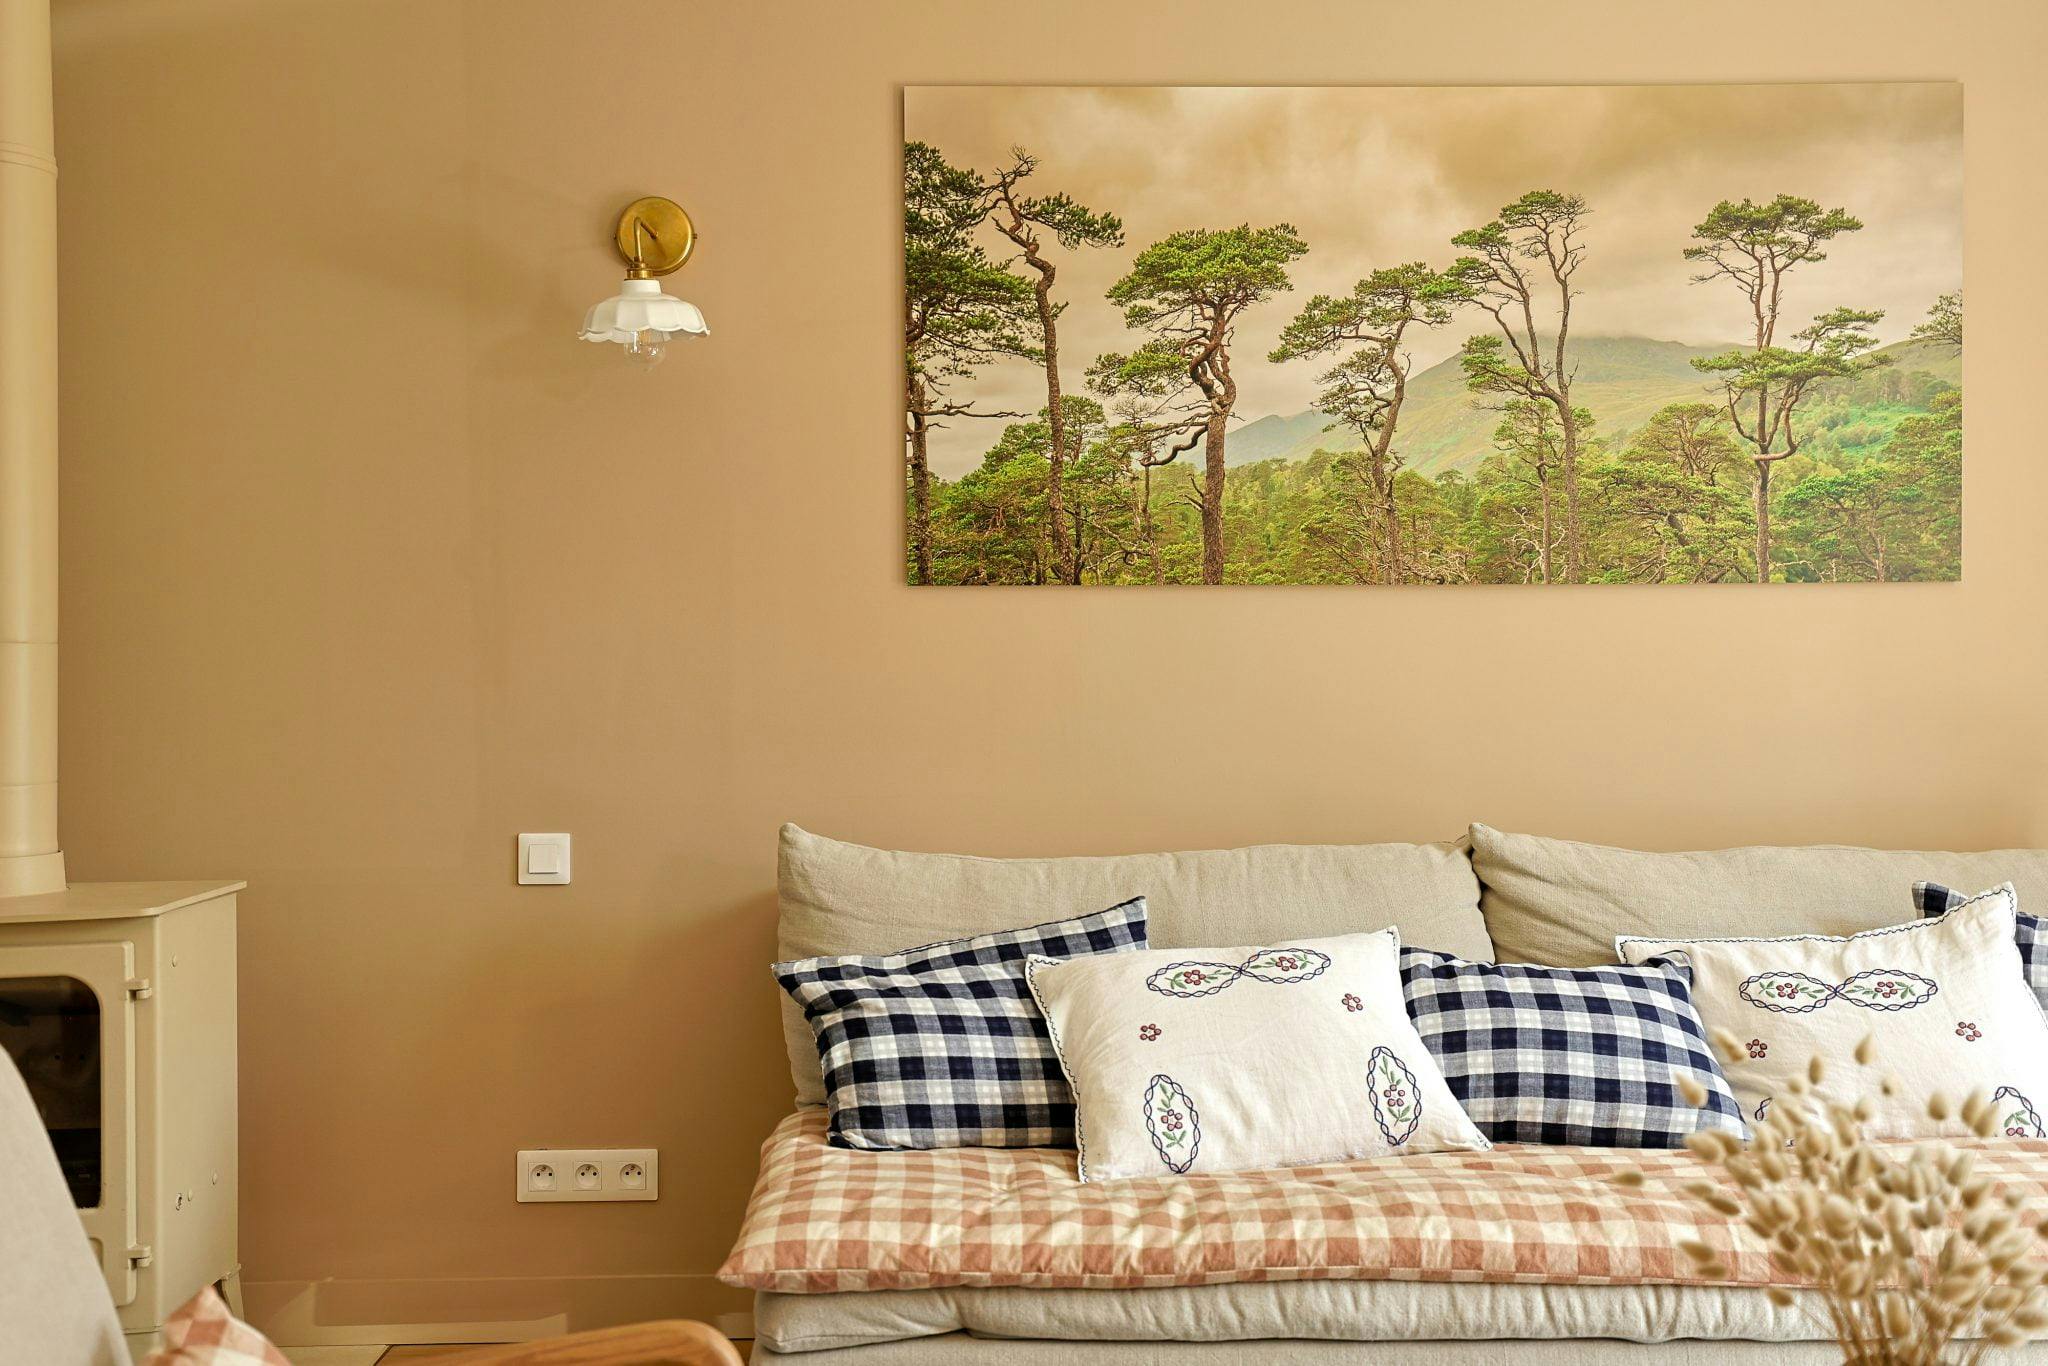 La Bien Aimée's living room: gingham blanket and beige walls